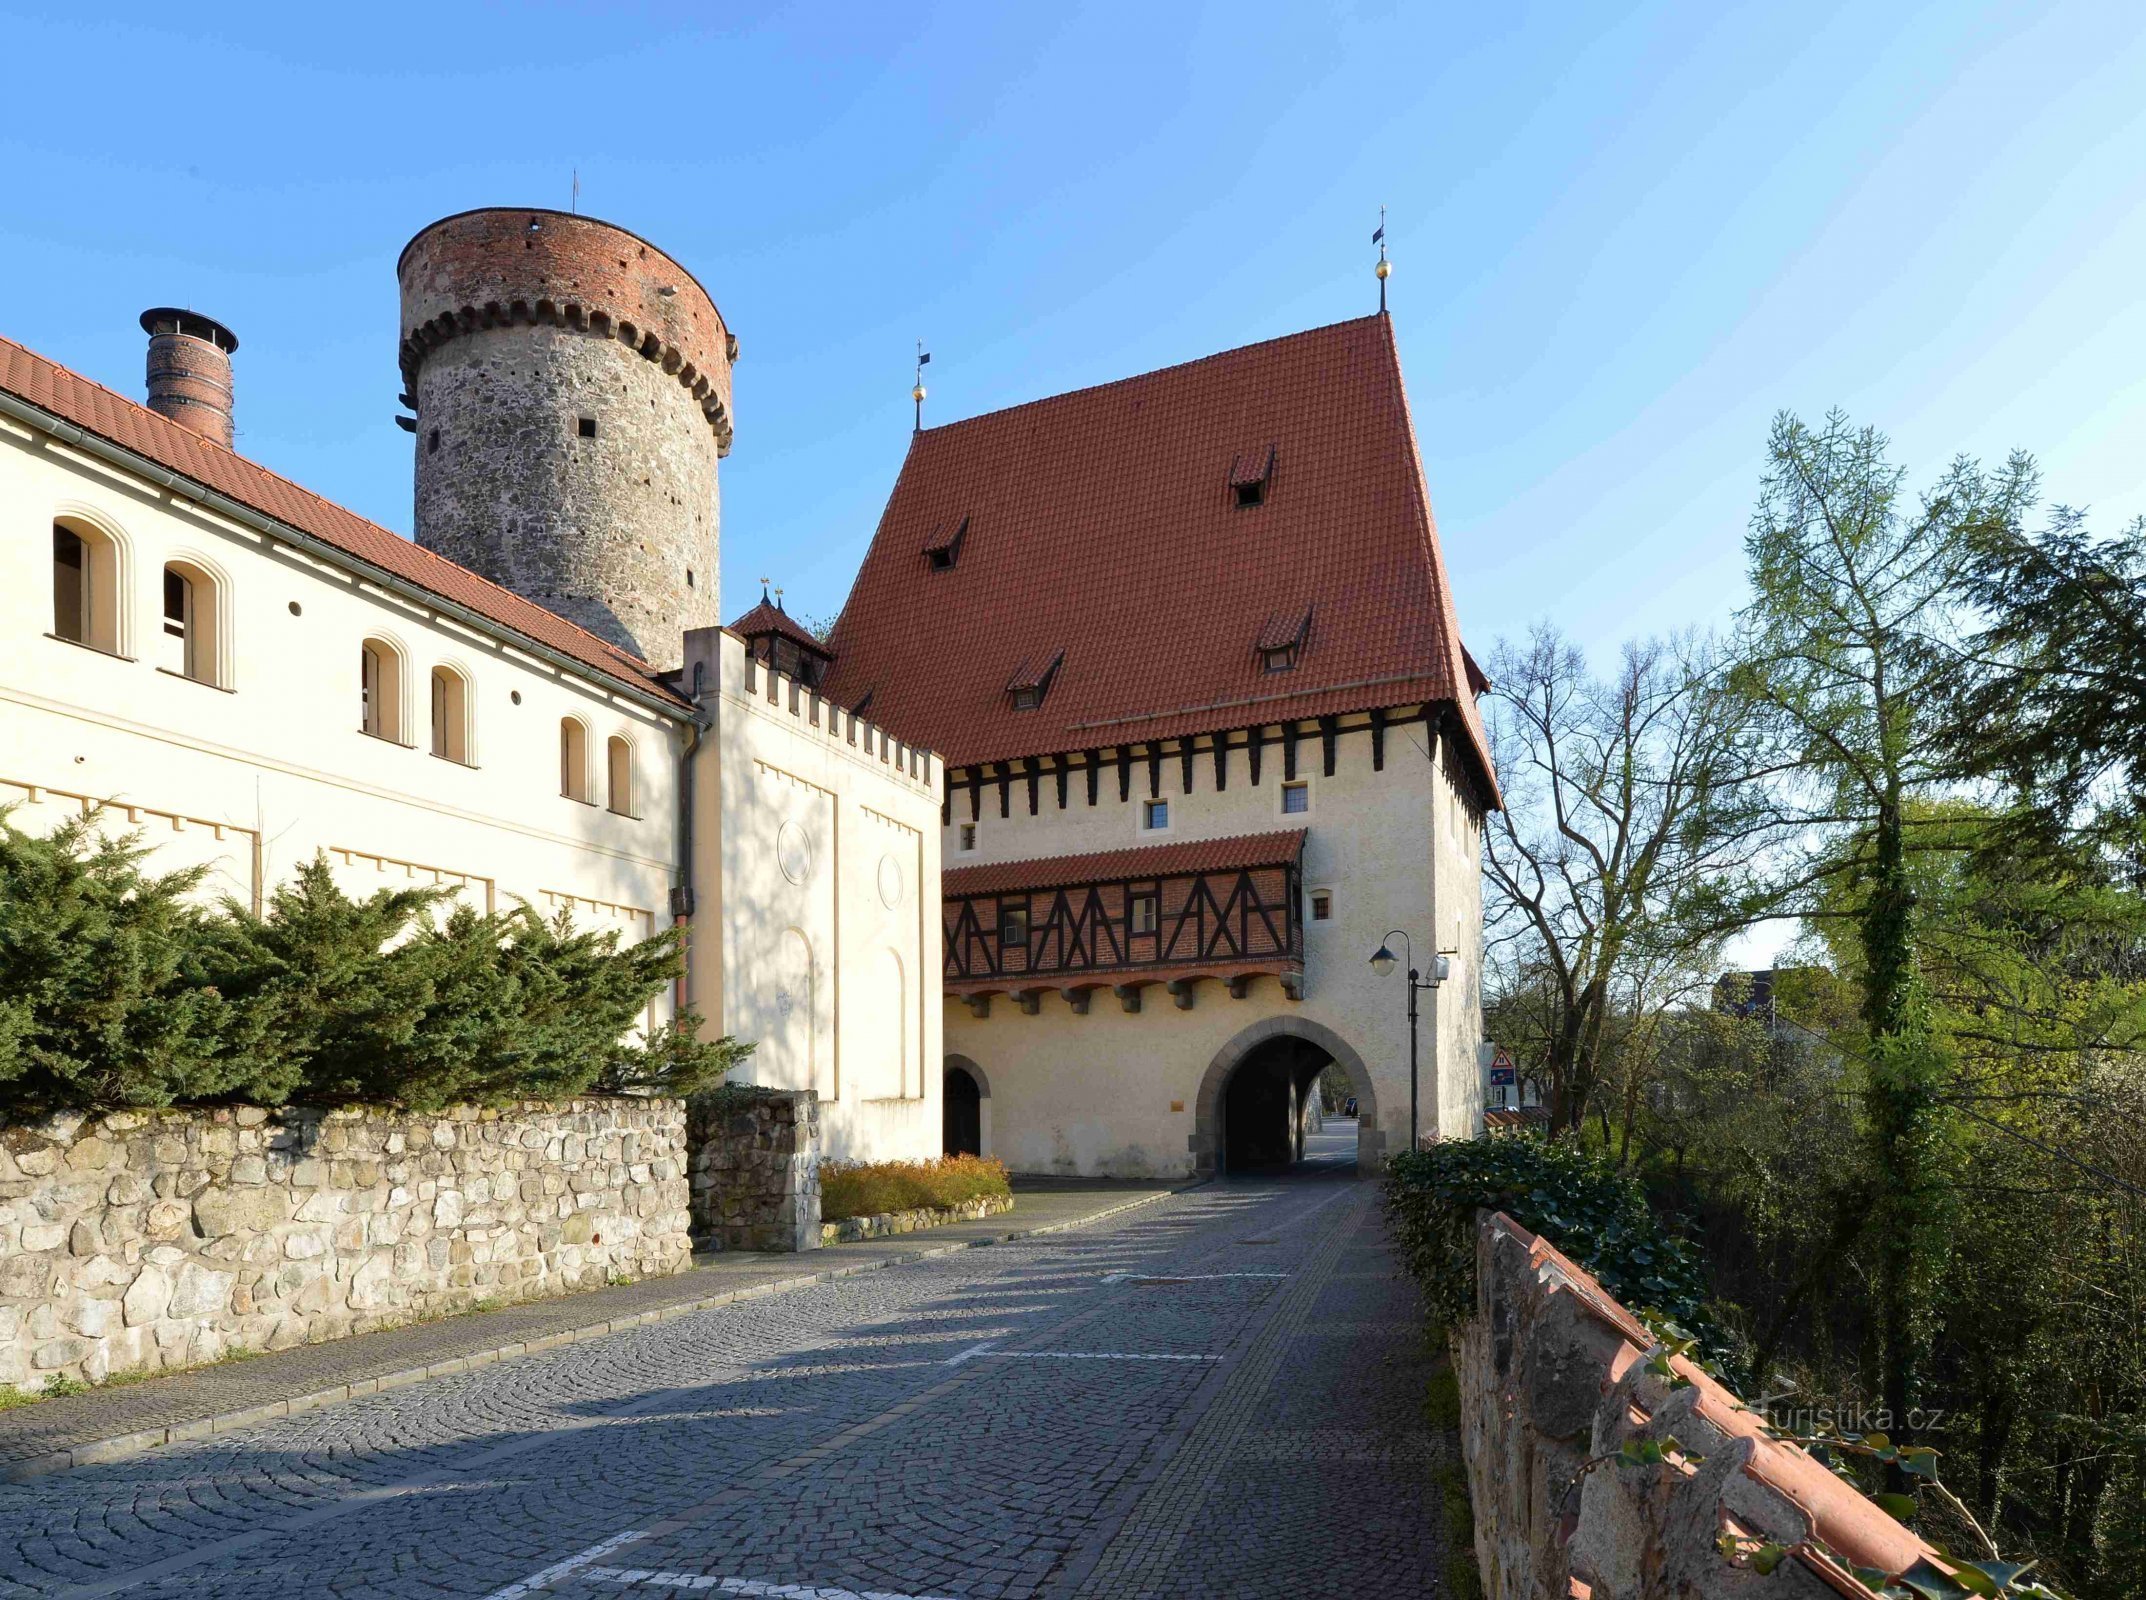 Kotnov-torni ja Bechyňská-portti - yksi Táborin vanhimmista monumenteista